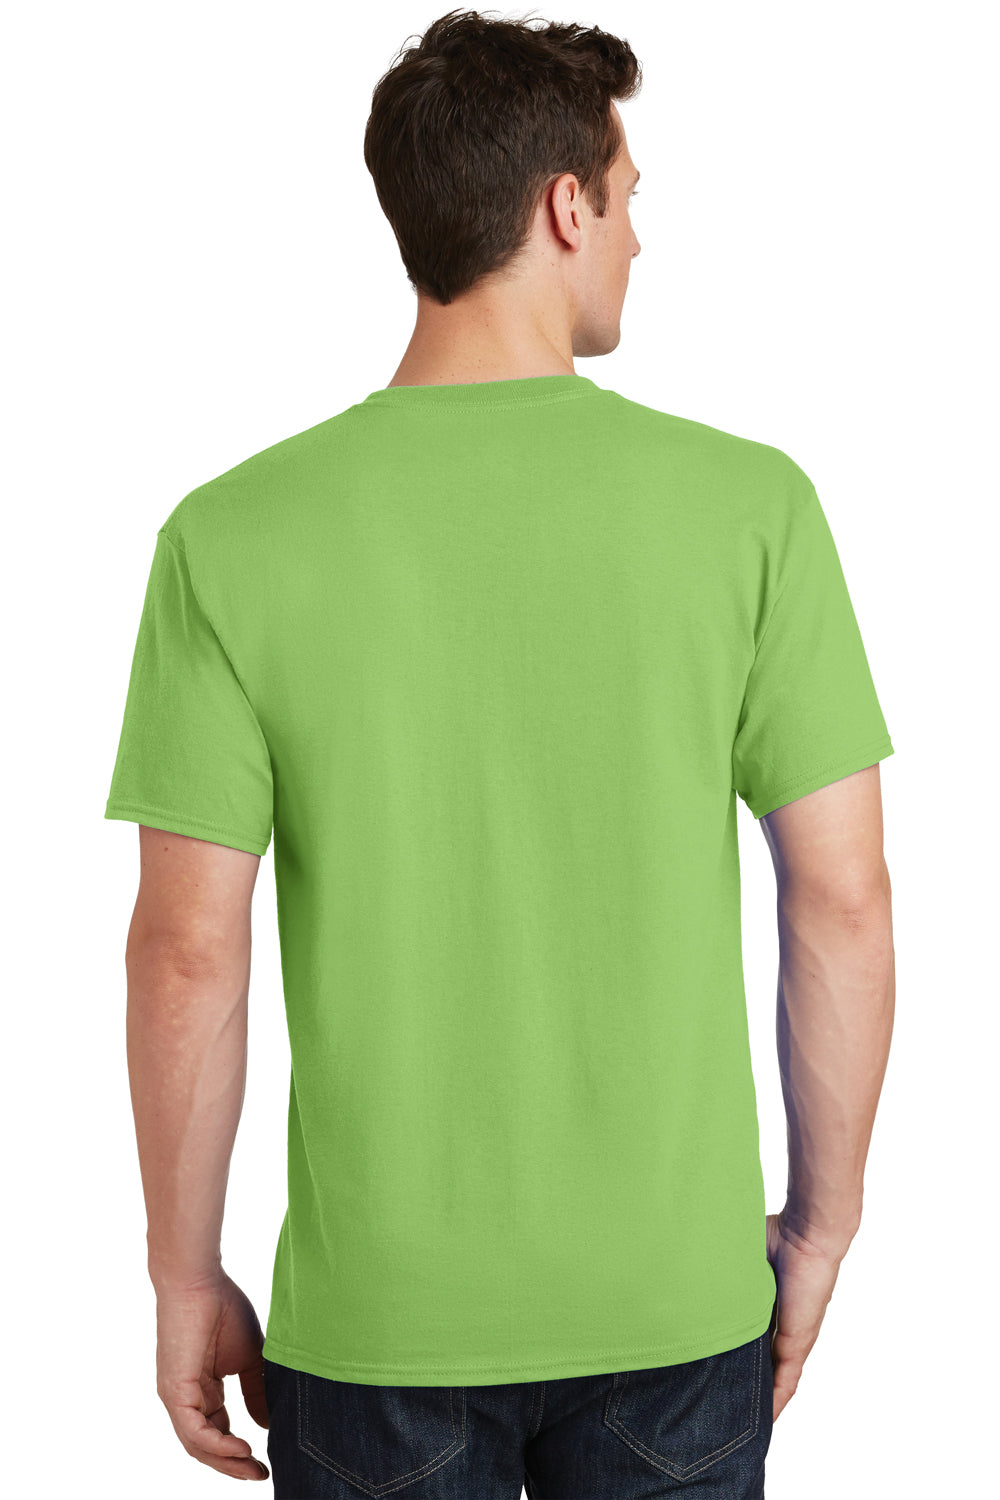 Port & Company PC54 Mens Core Short Sleeve Crewneck T-Shirt Lime Green Back